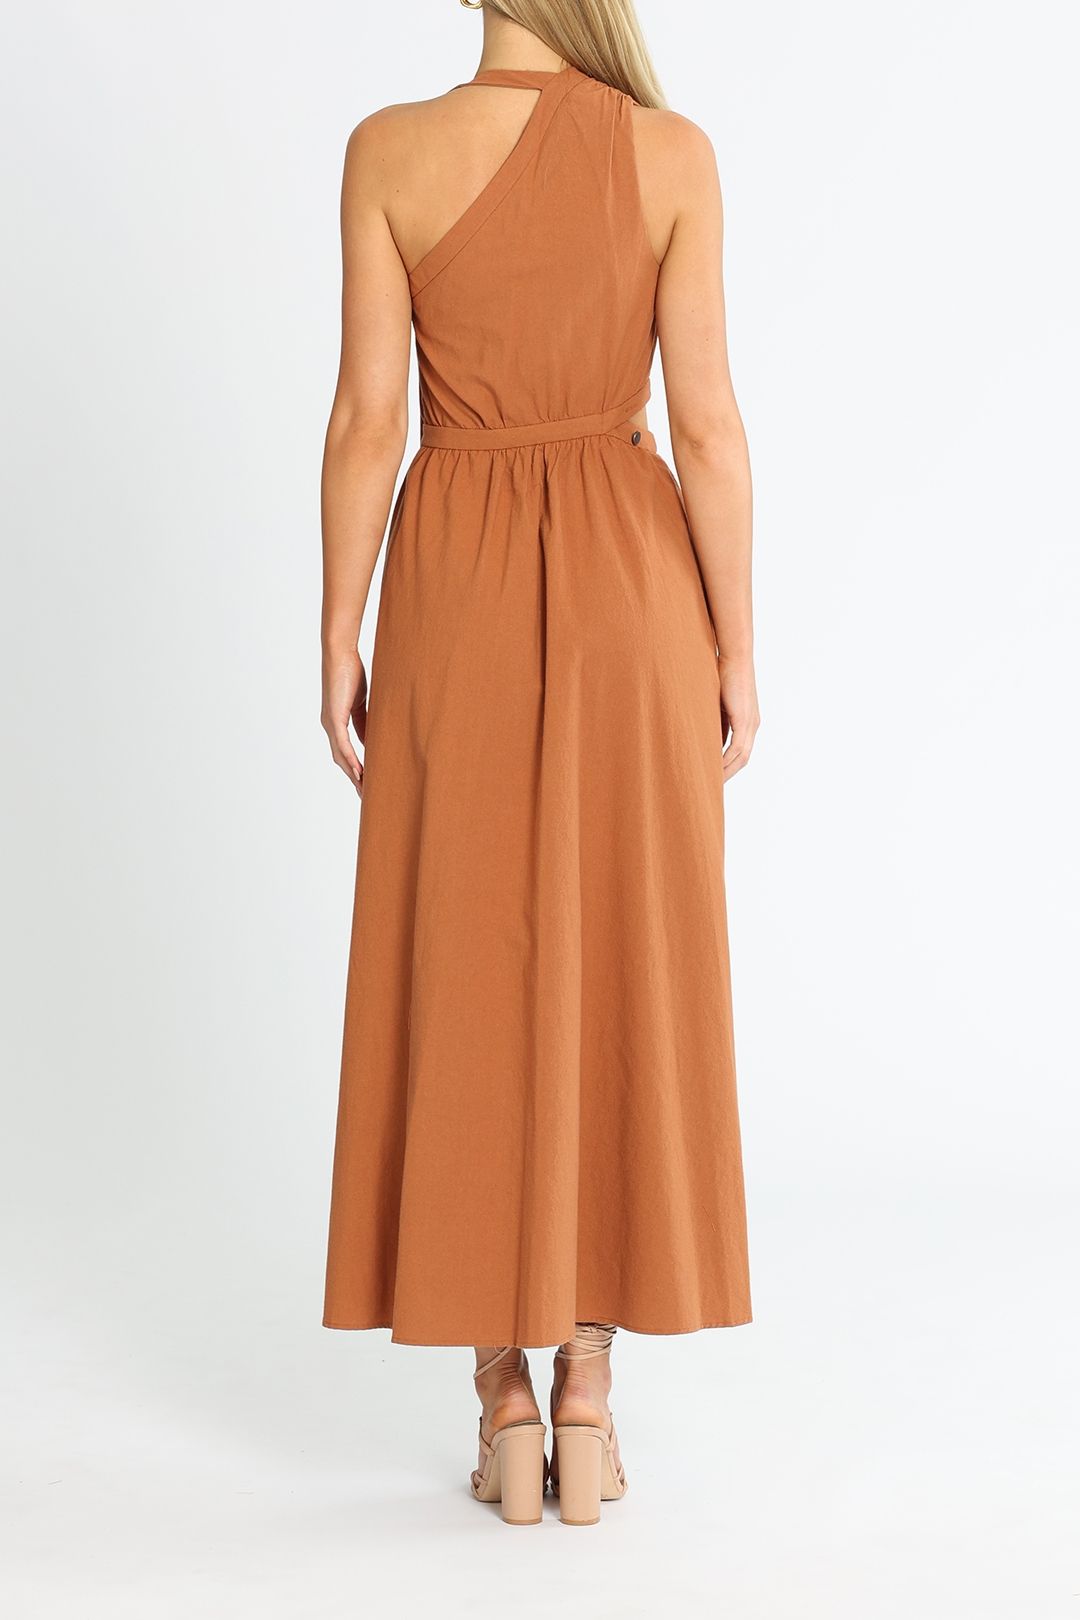 Cue Cotton Buttoned Asymmetric Dress Maxi